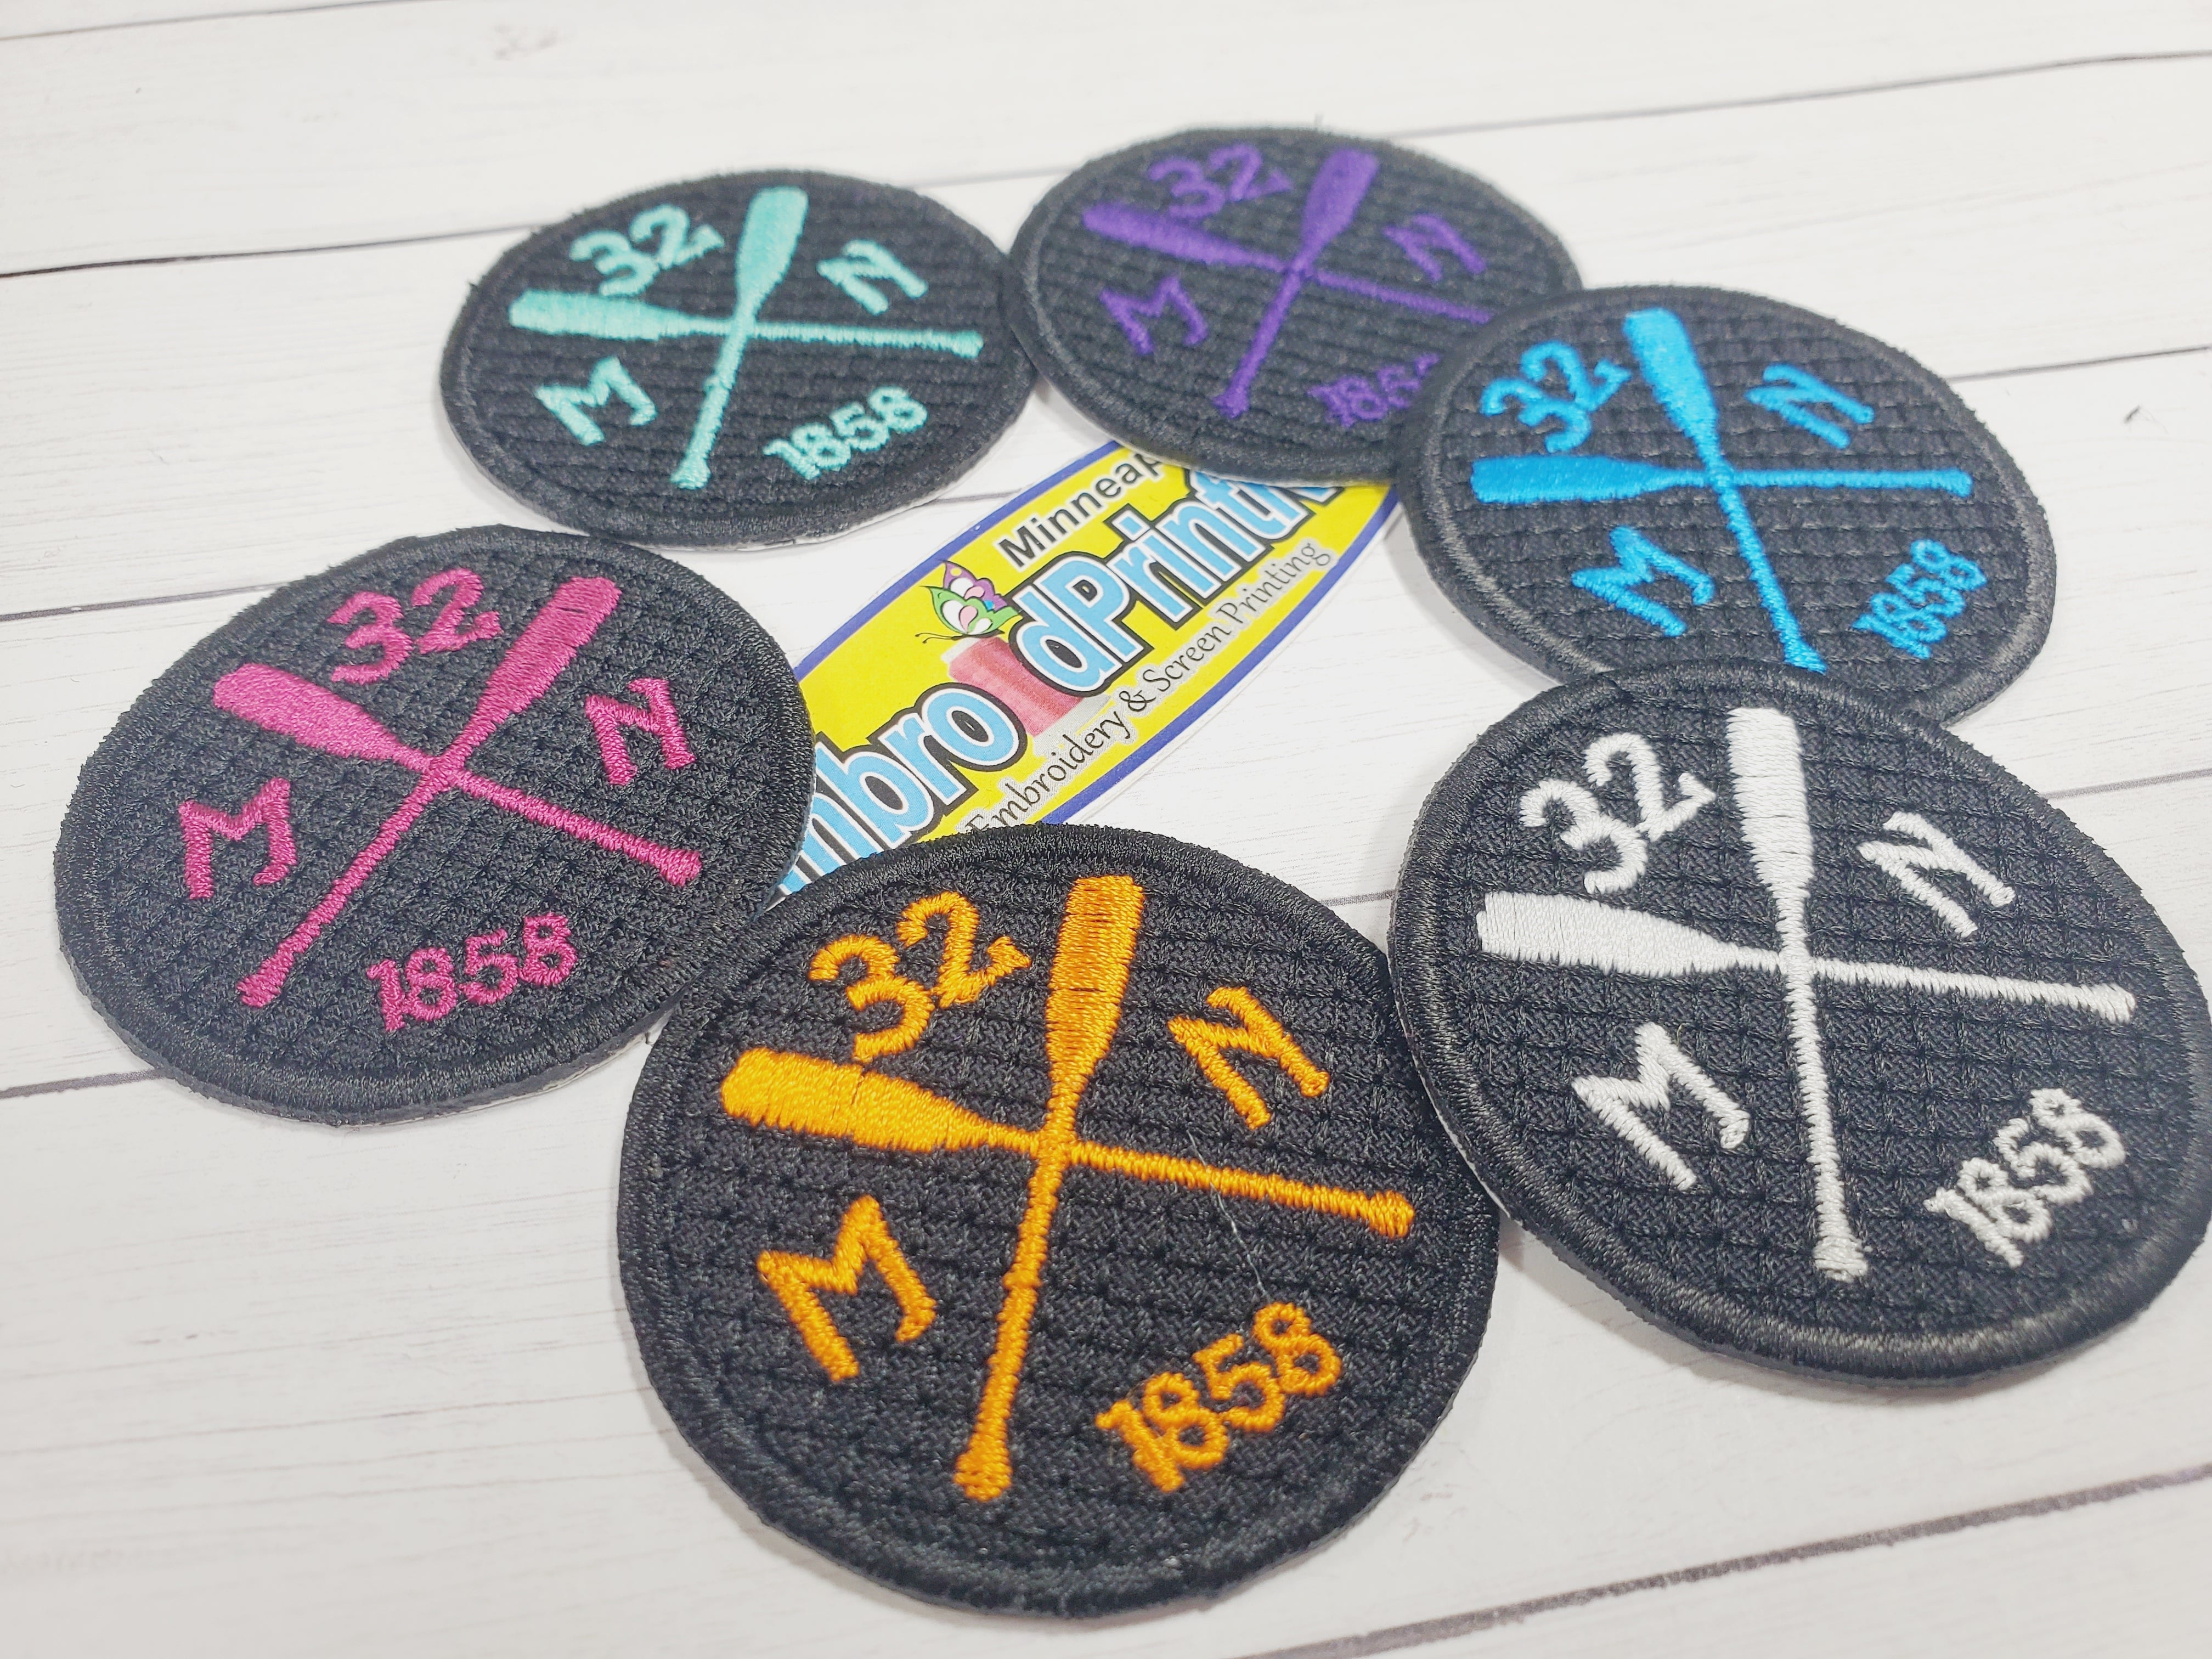 Cheap custom embroidered patches - Migdigitizing